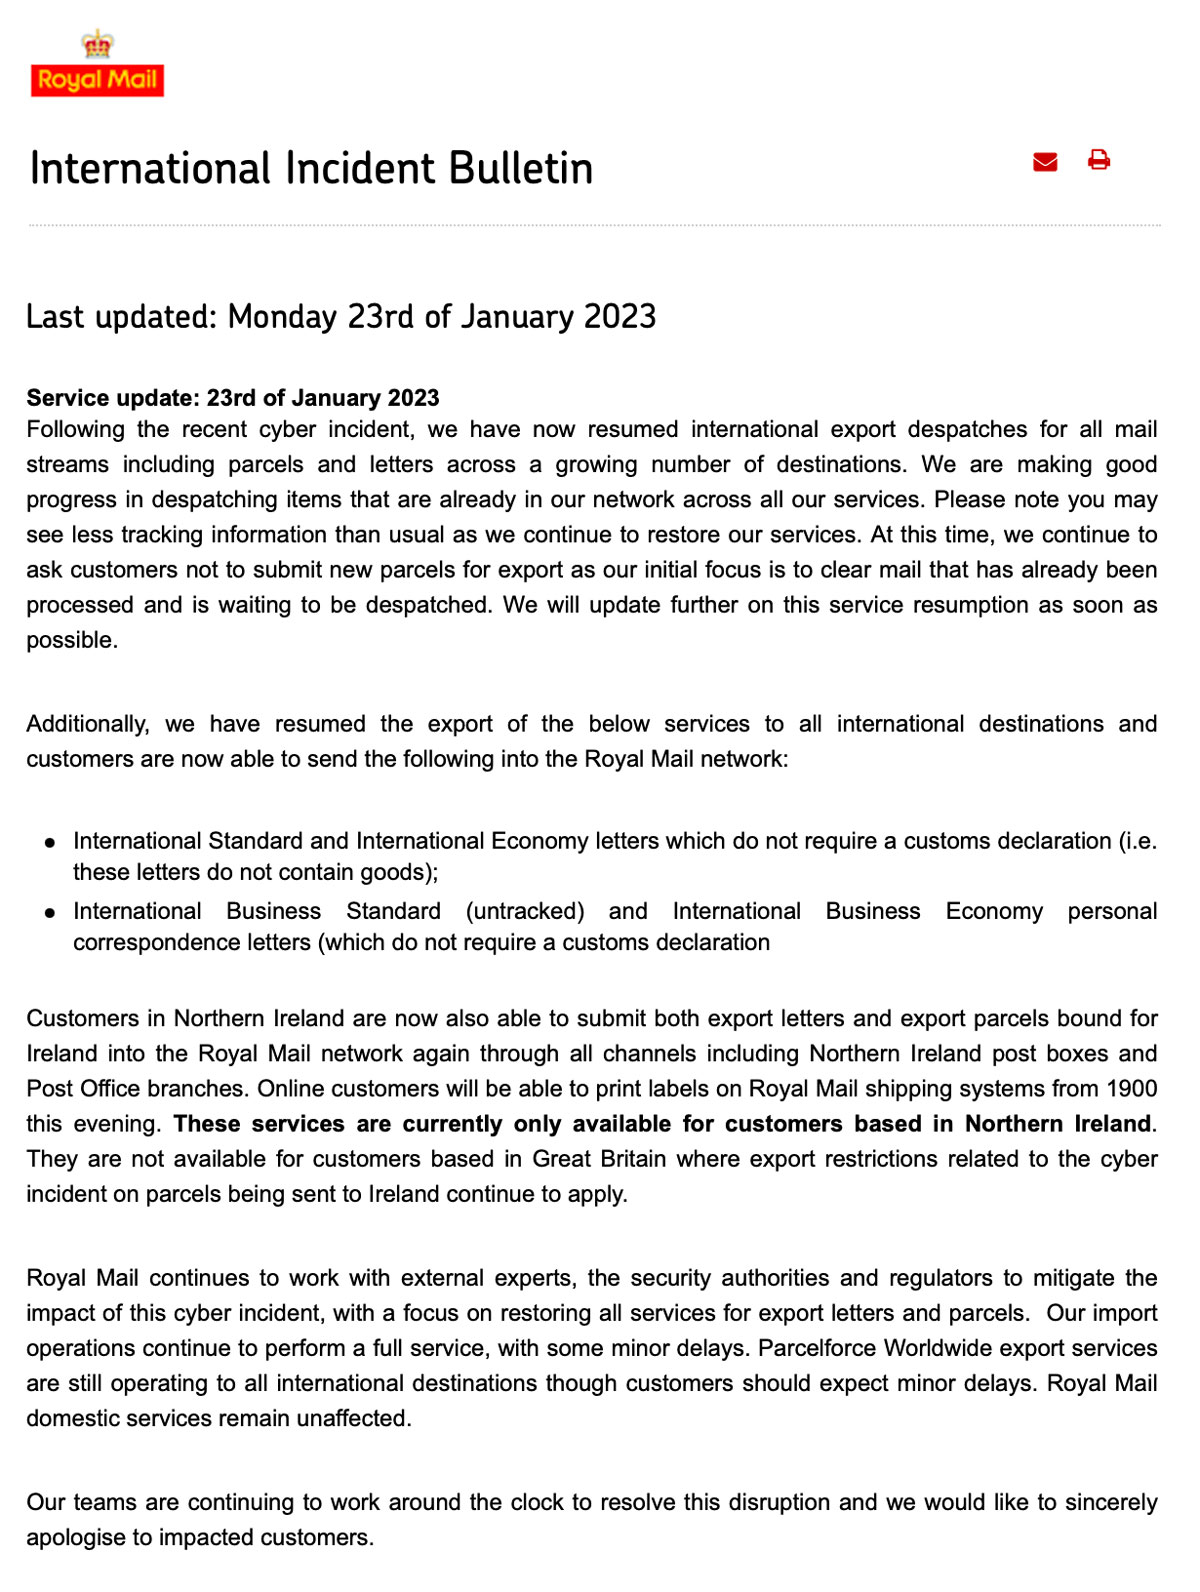 Royal Mail incident statement 23 Jan 2023